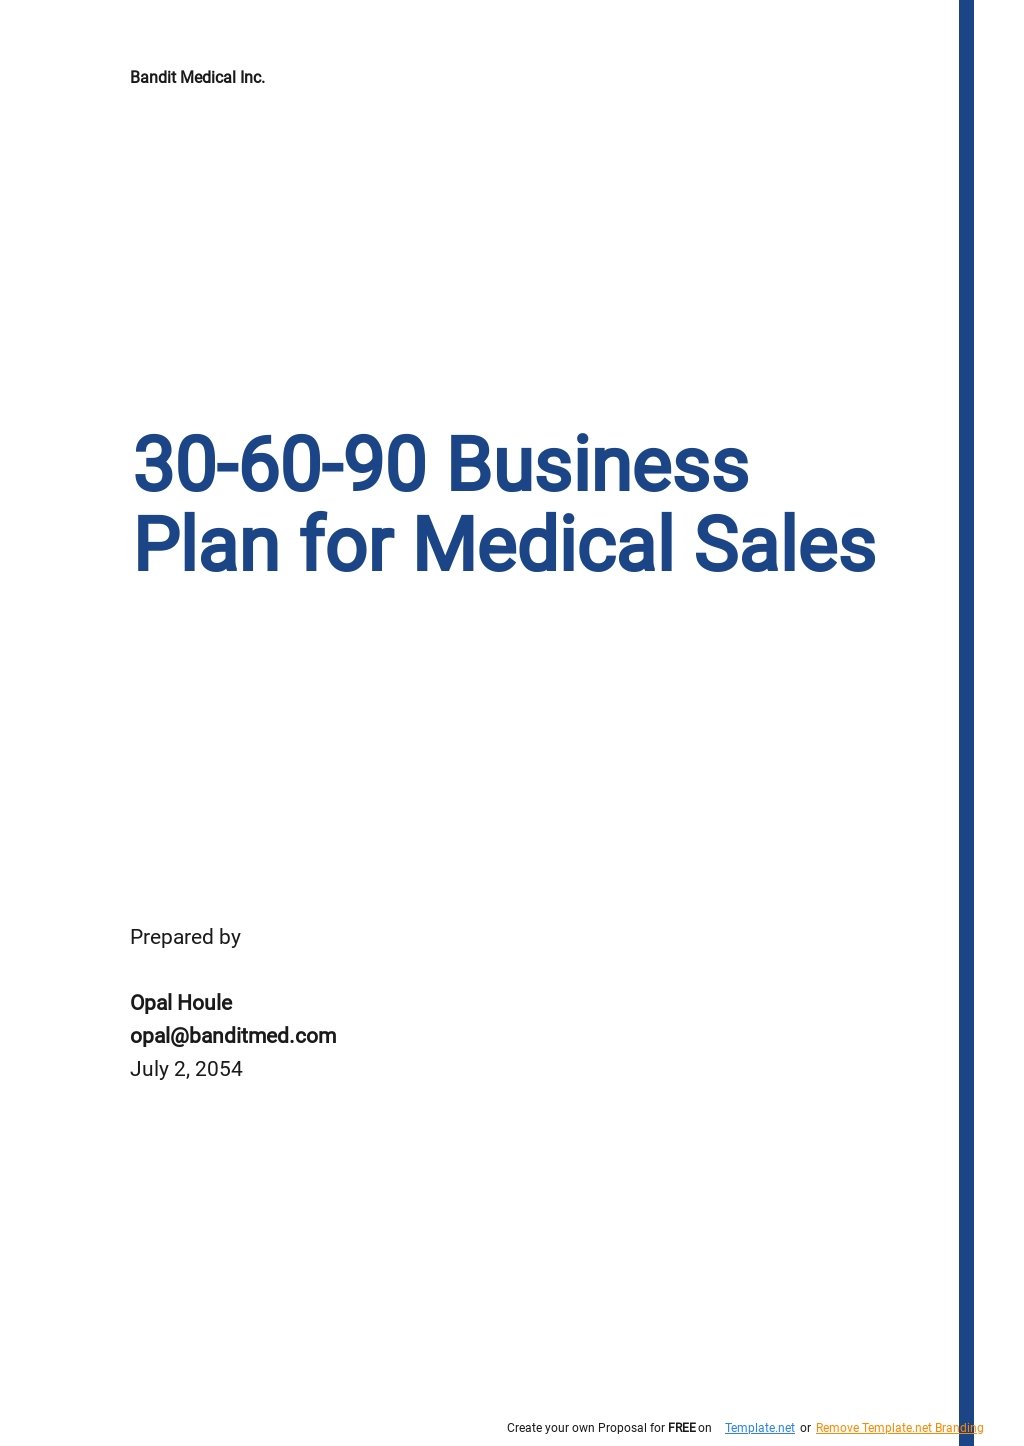 30-60-90 Business Plan for Medical Sales